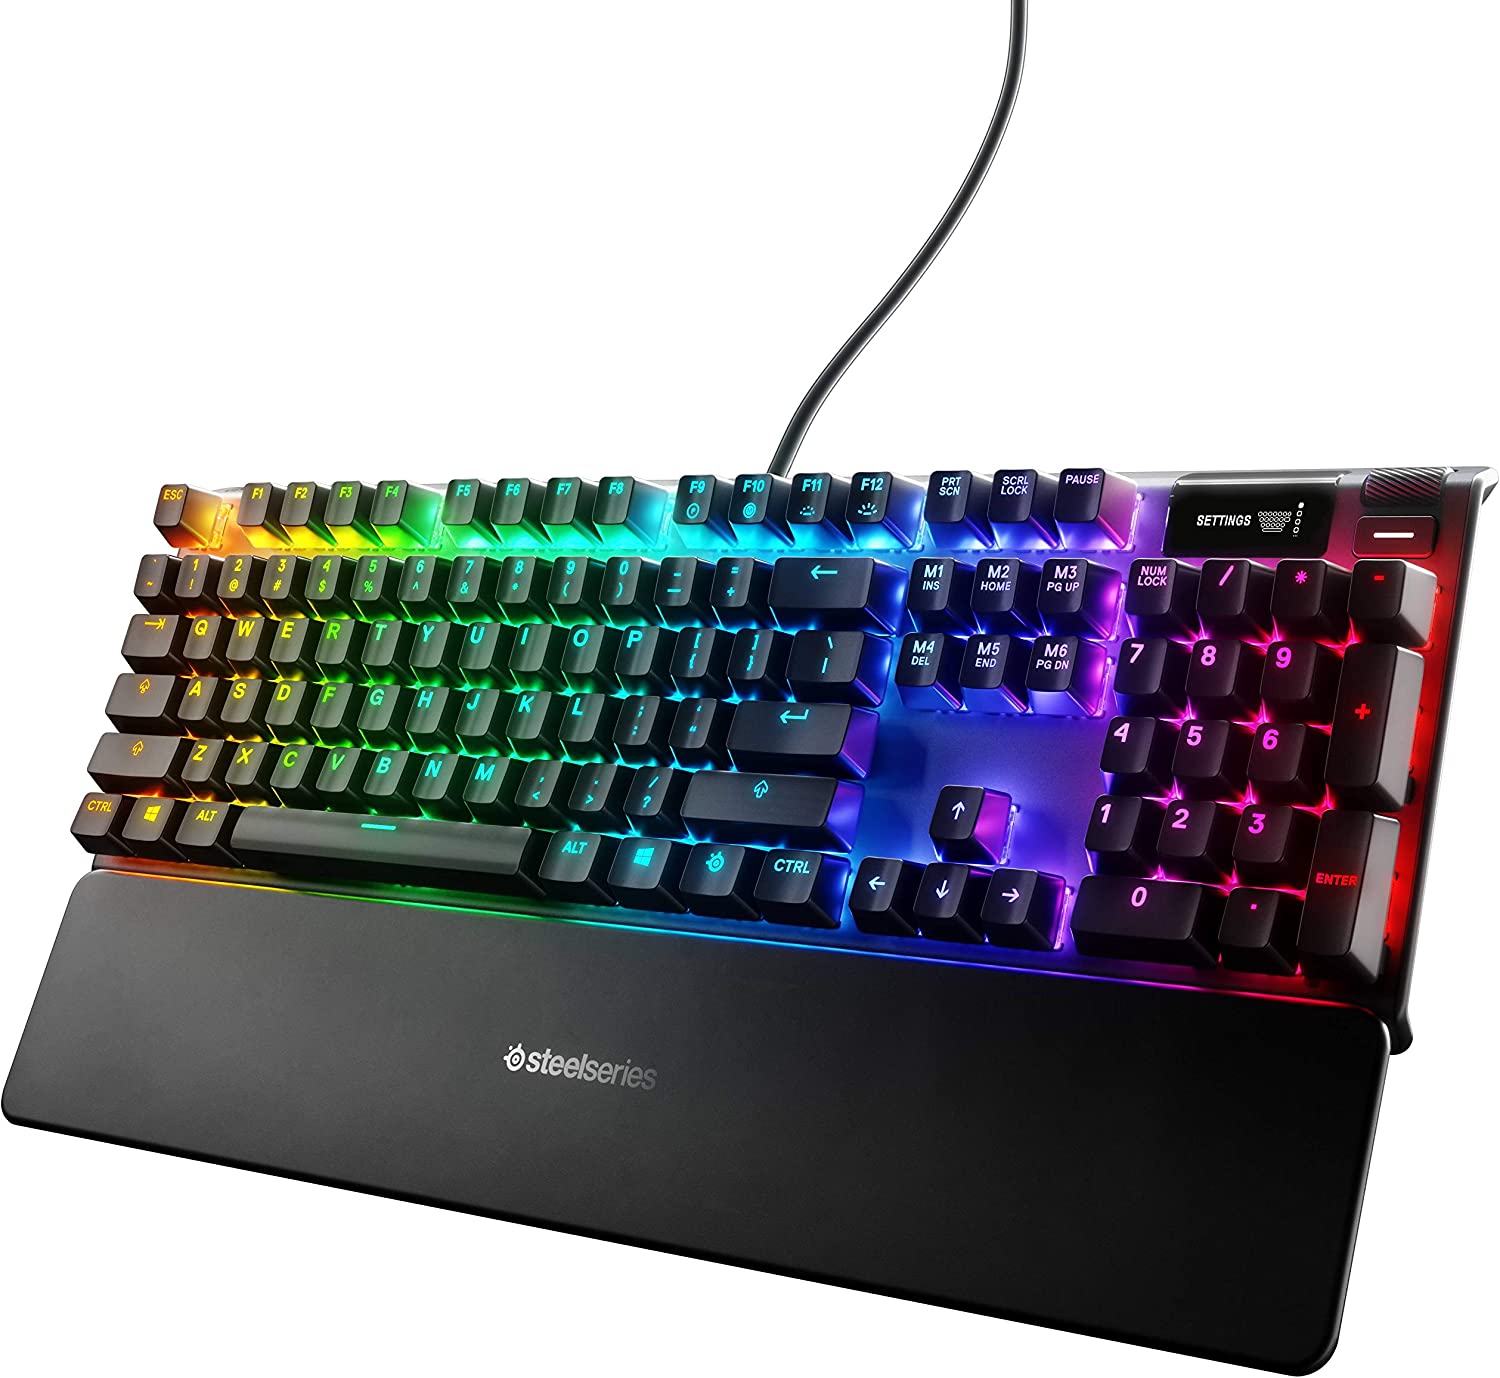 Steel Series Apex Pro USB Mechanical Gaming Keyboard – 조정 가능한 작동 스위치 – 세계에서 가장 빠른 기계식 키보드 – OLED 스마트 디스플레이 – RGB 백라이트